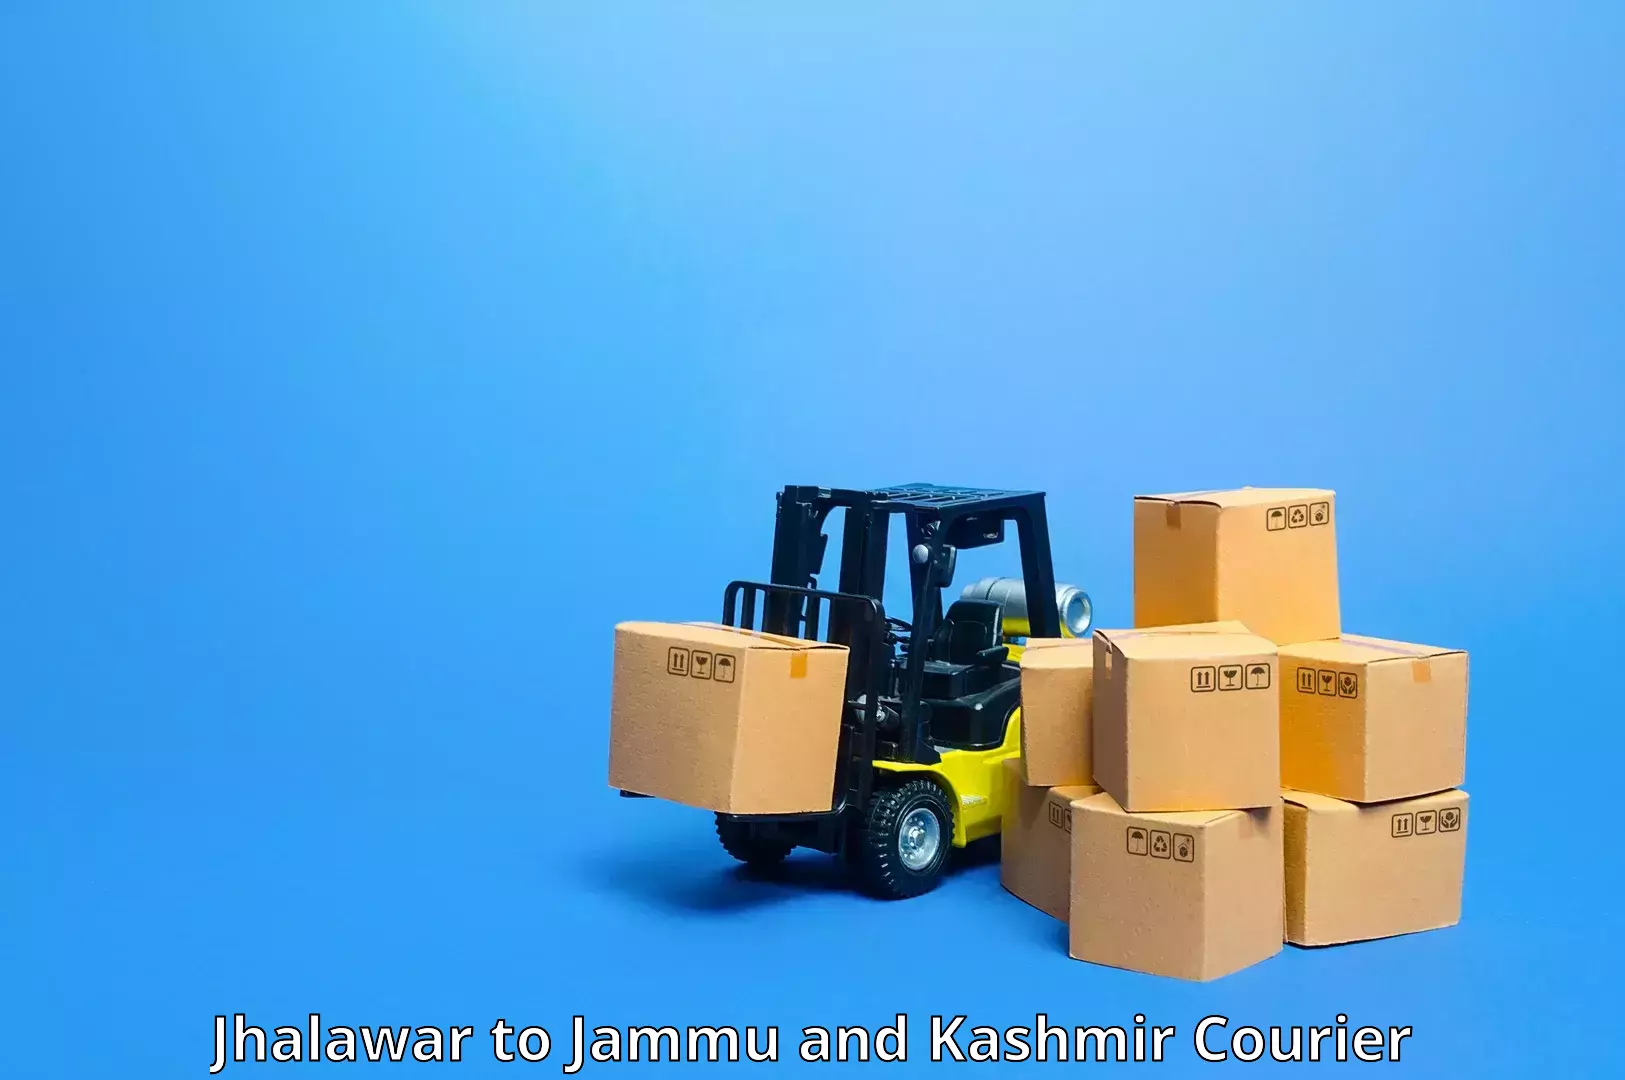 Express delivery capabilities Jhalawar to Baramulla